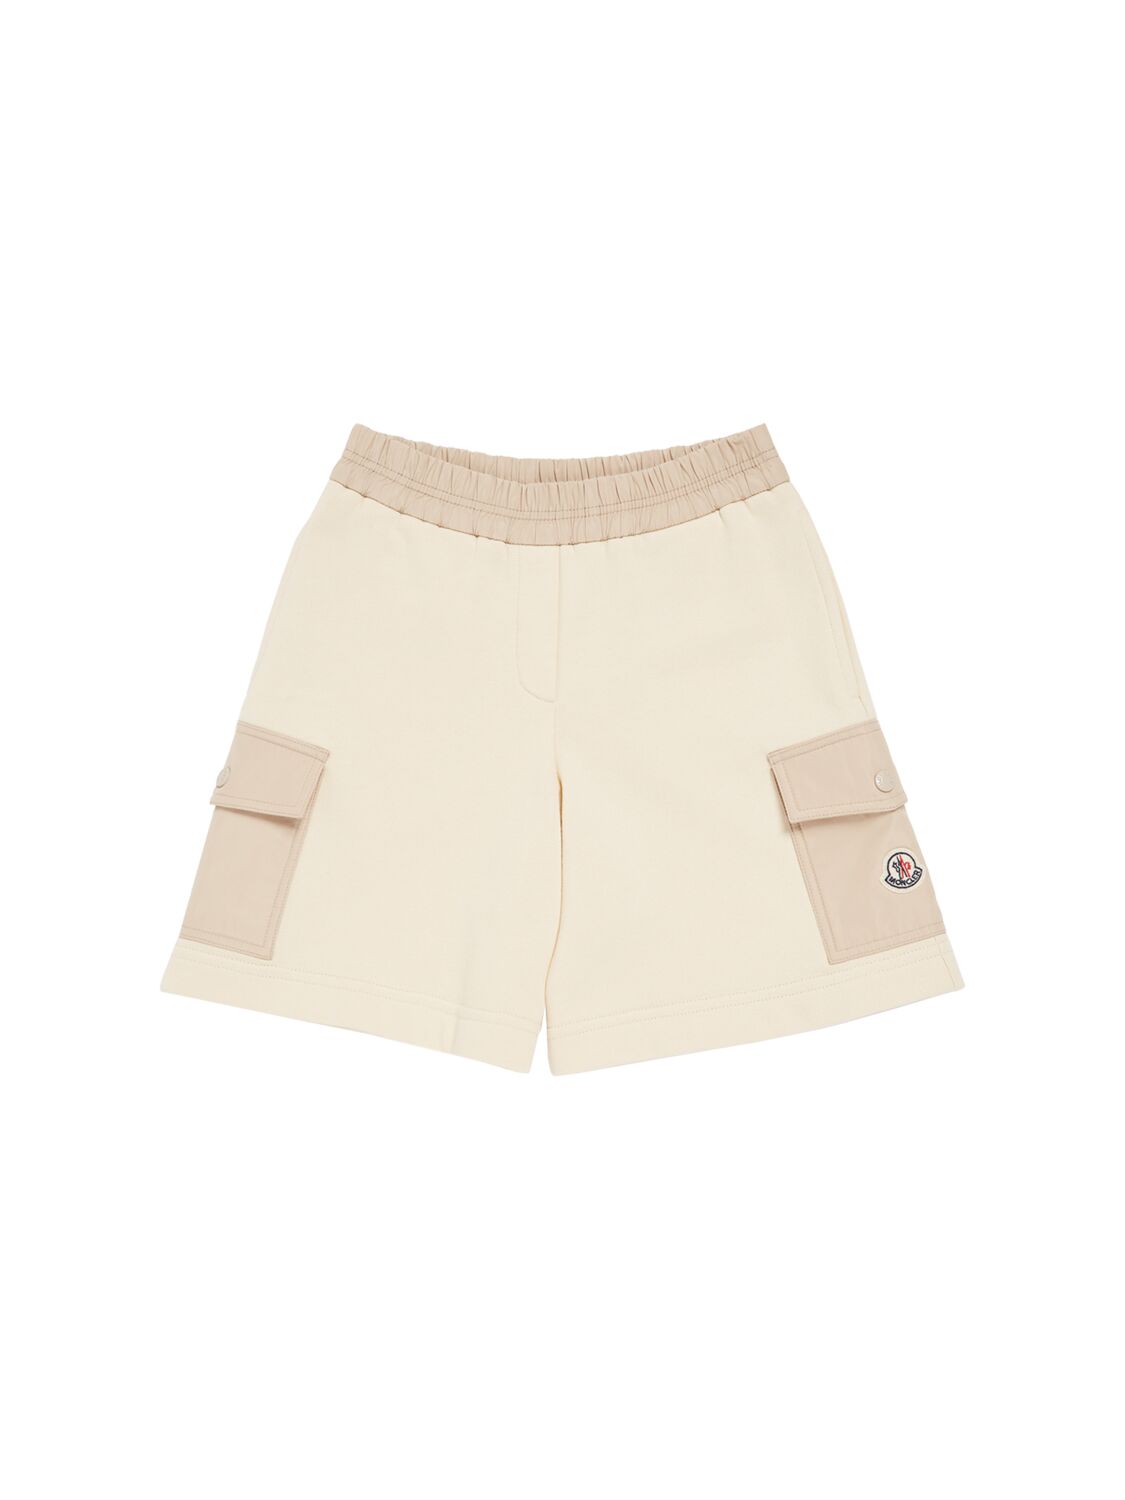 Image of Cotton Fleece Shorts